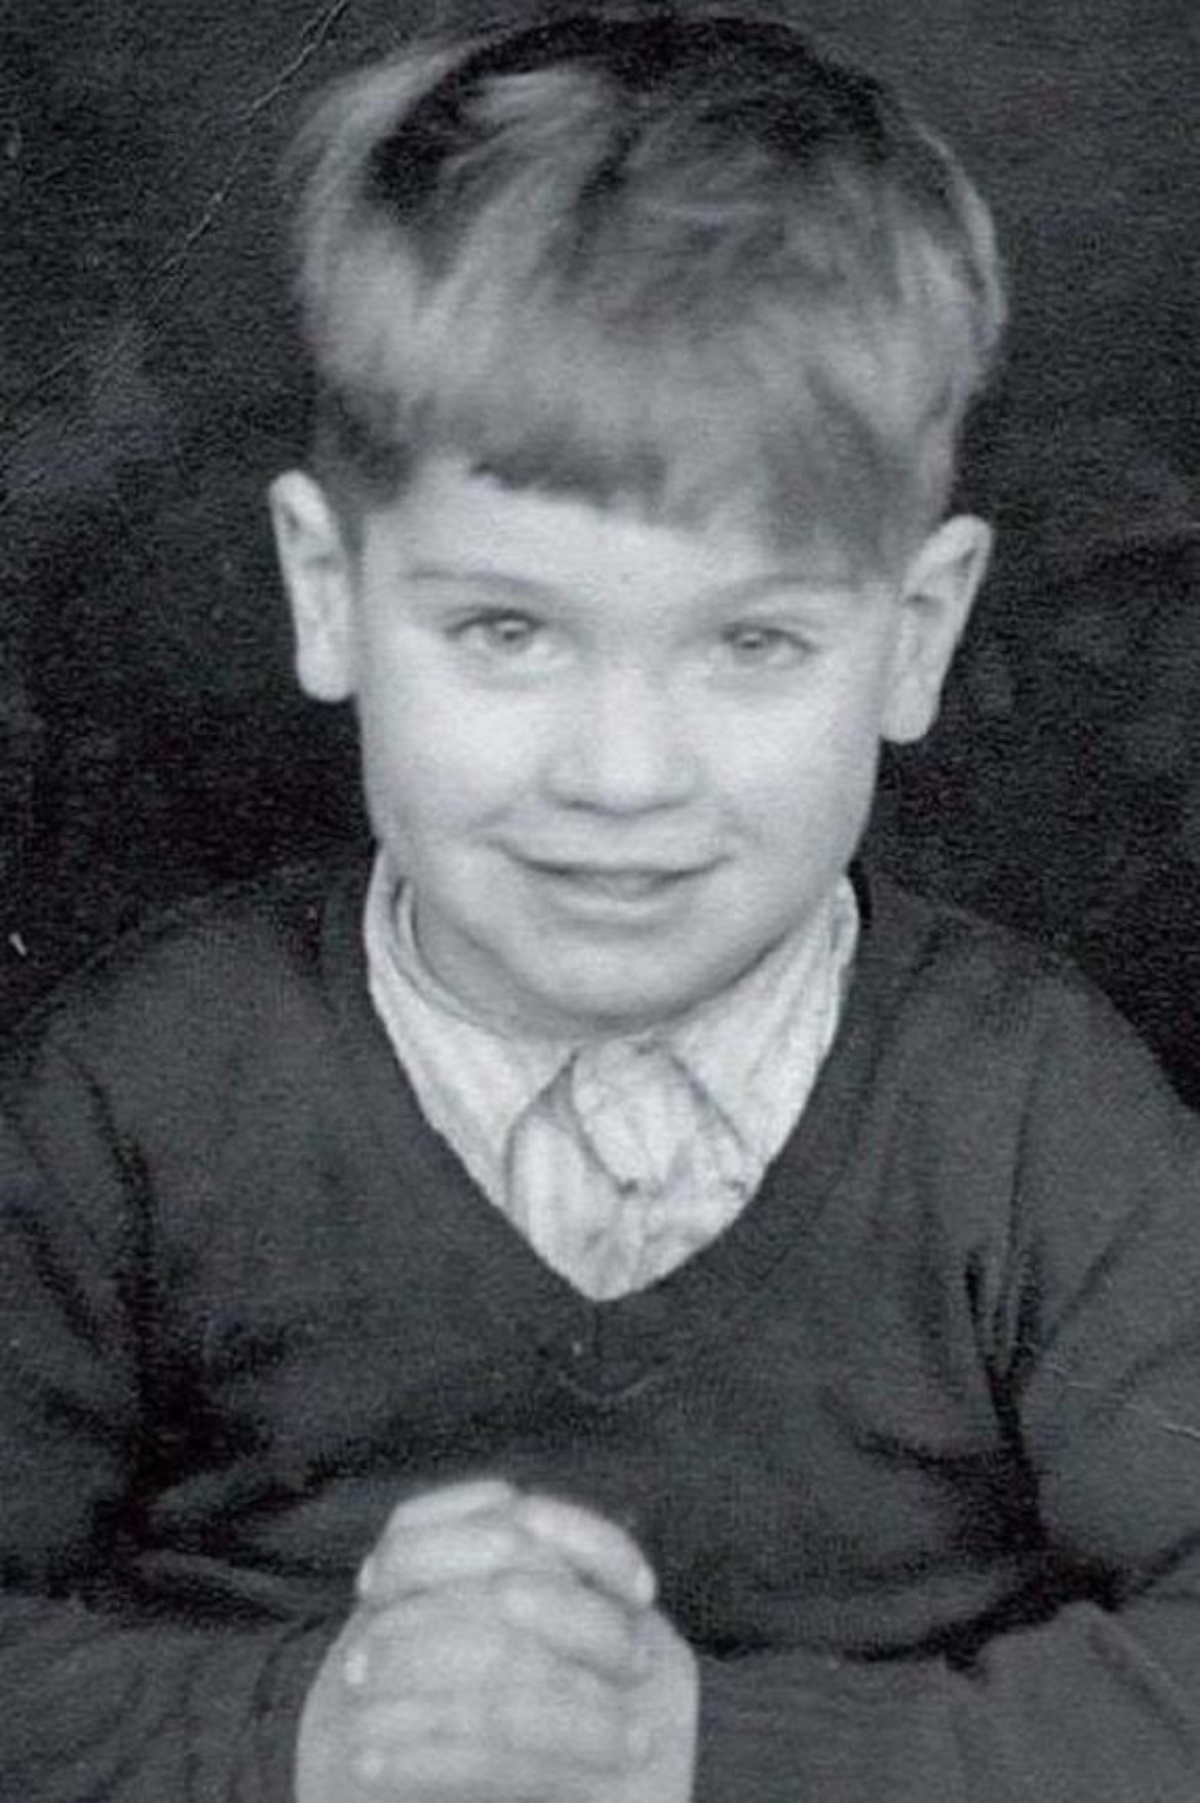 Ozzy Osbourne as a child